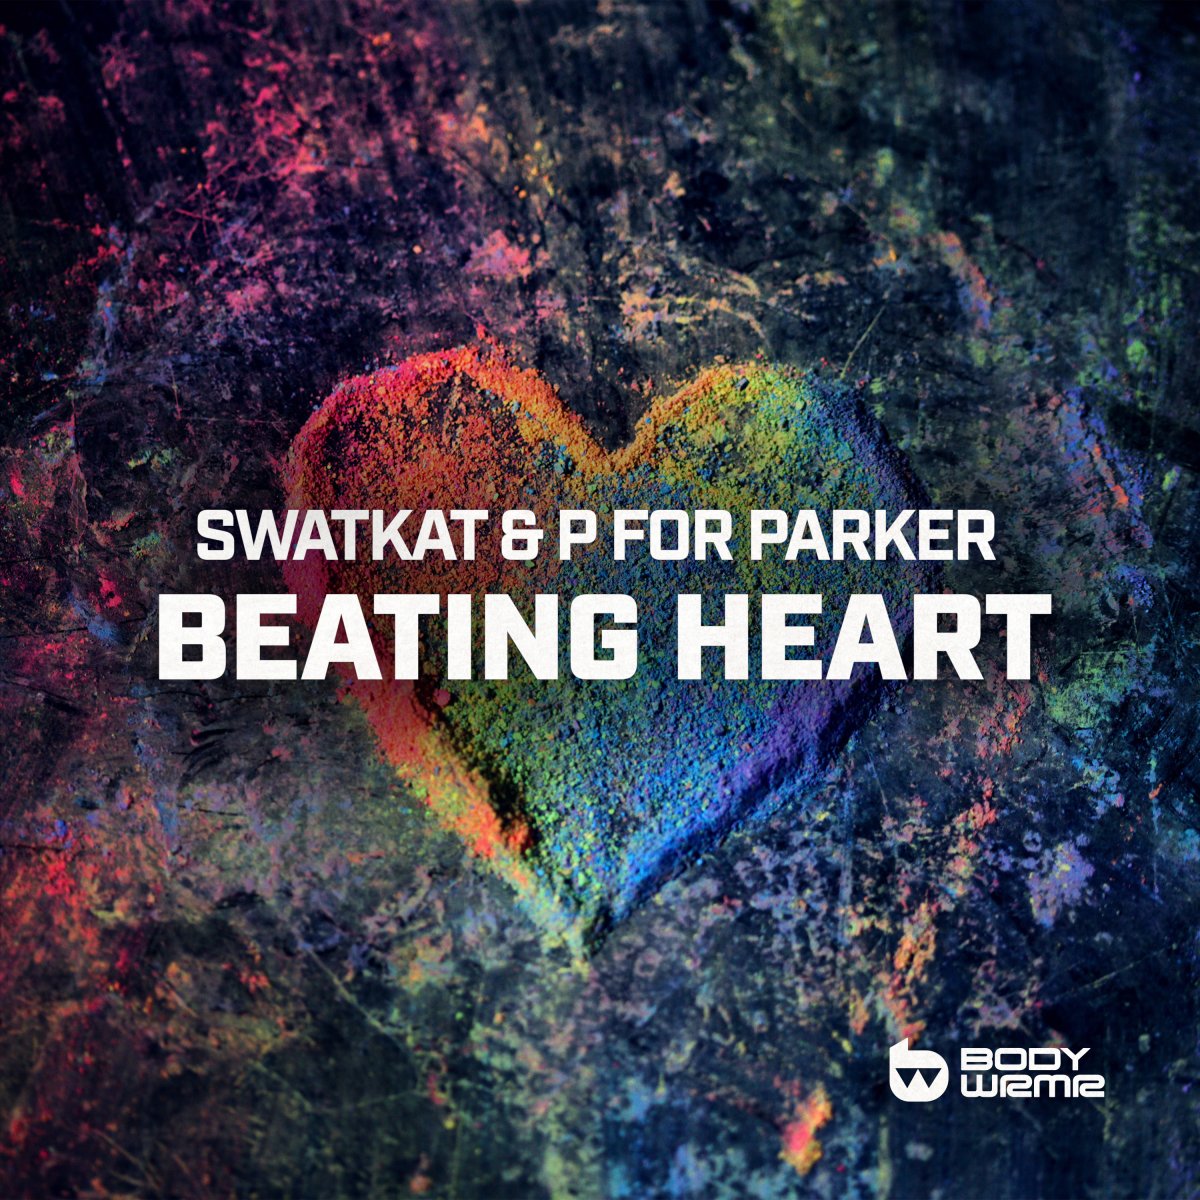 Beating Heart - Swatkat⁠ & P for Parker⁠ 